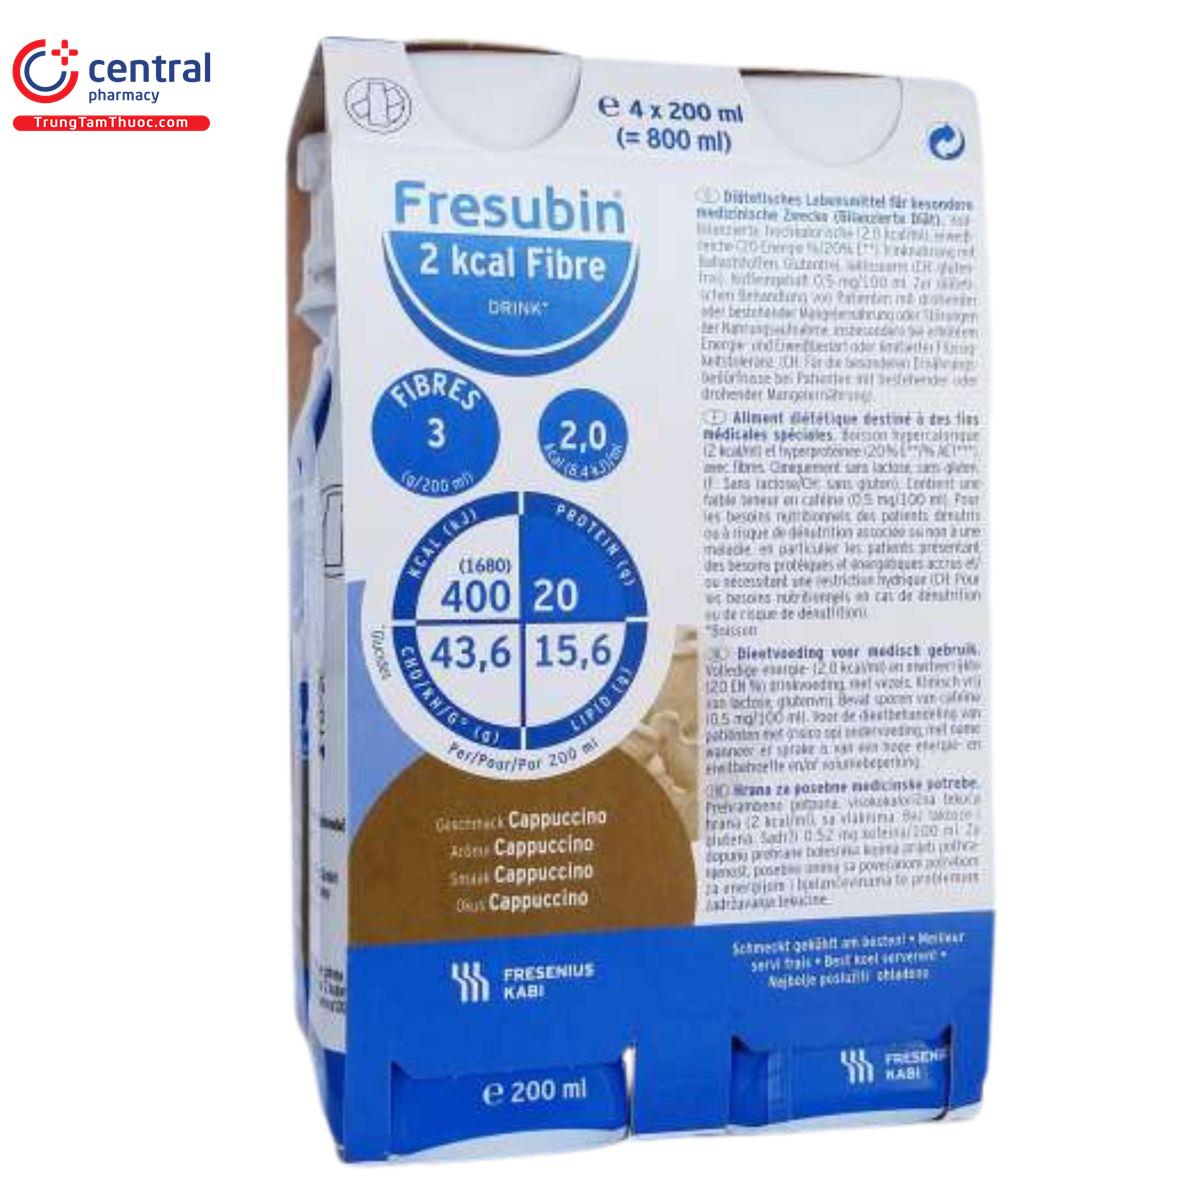 fresubin 2kcal fibre drink 11 R7012